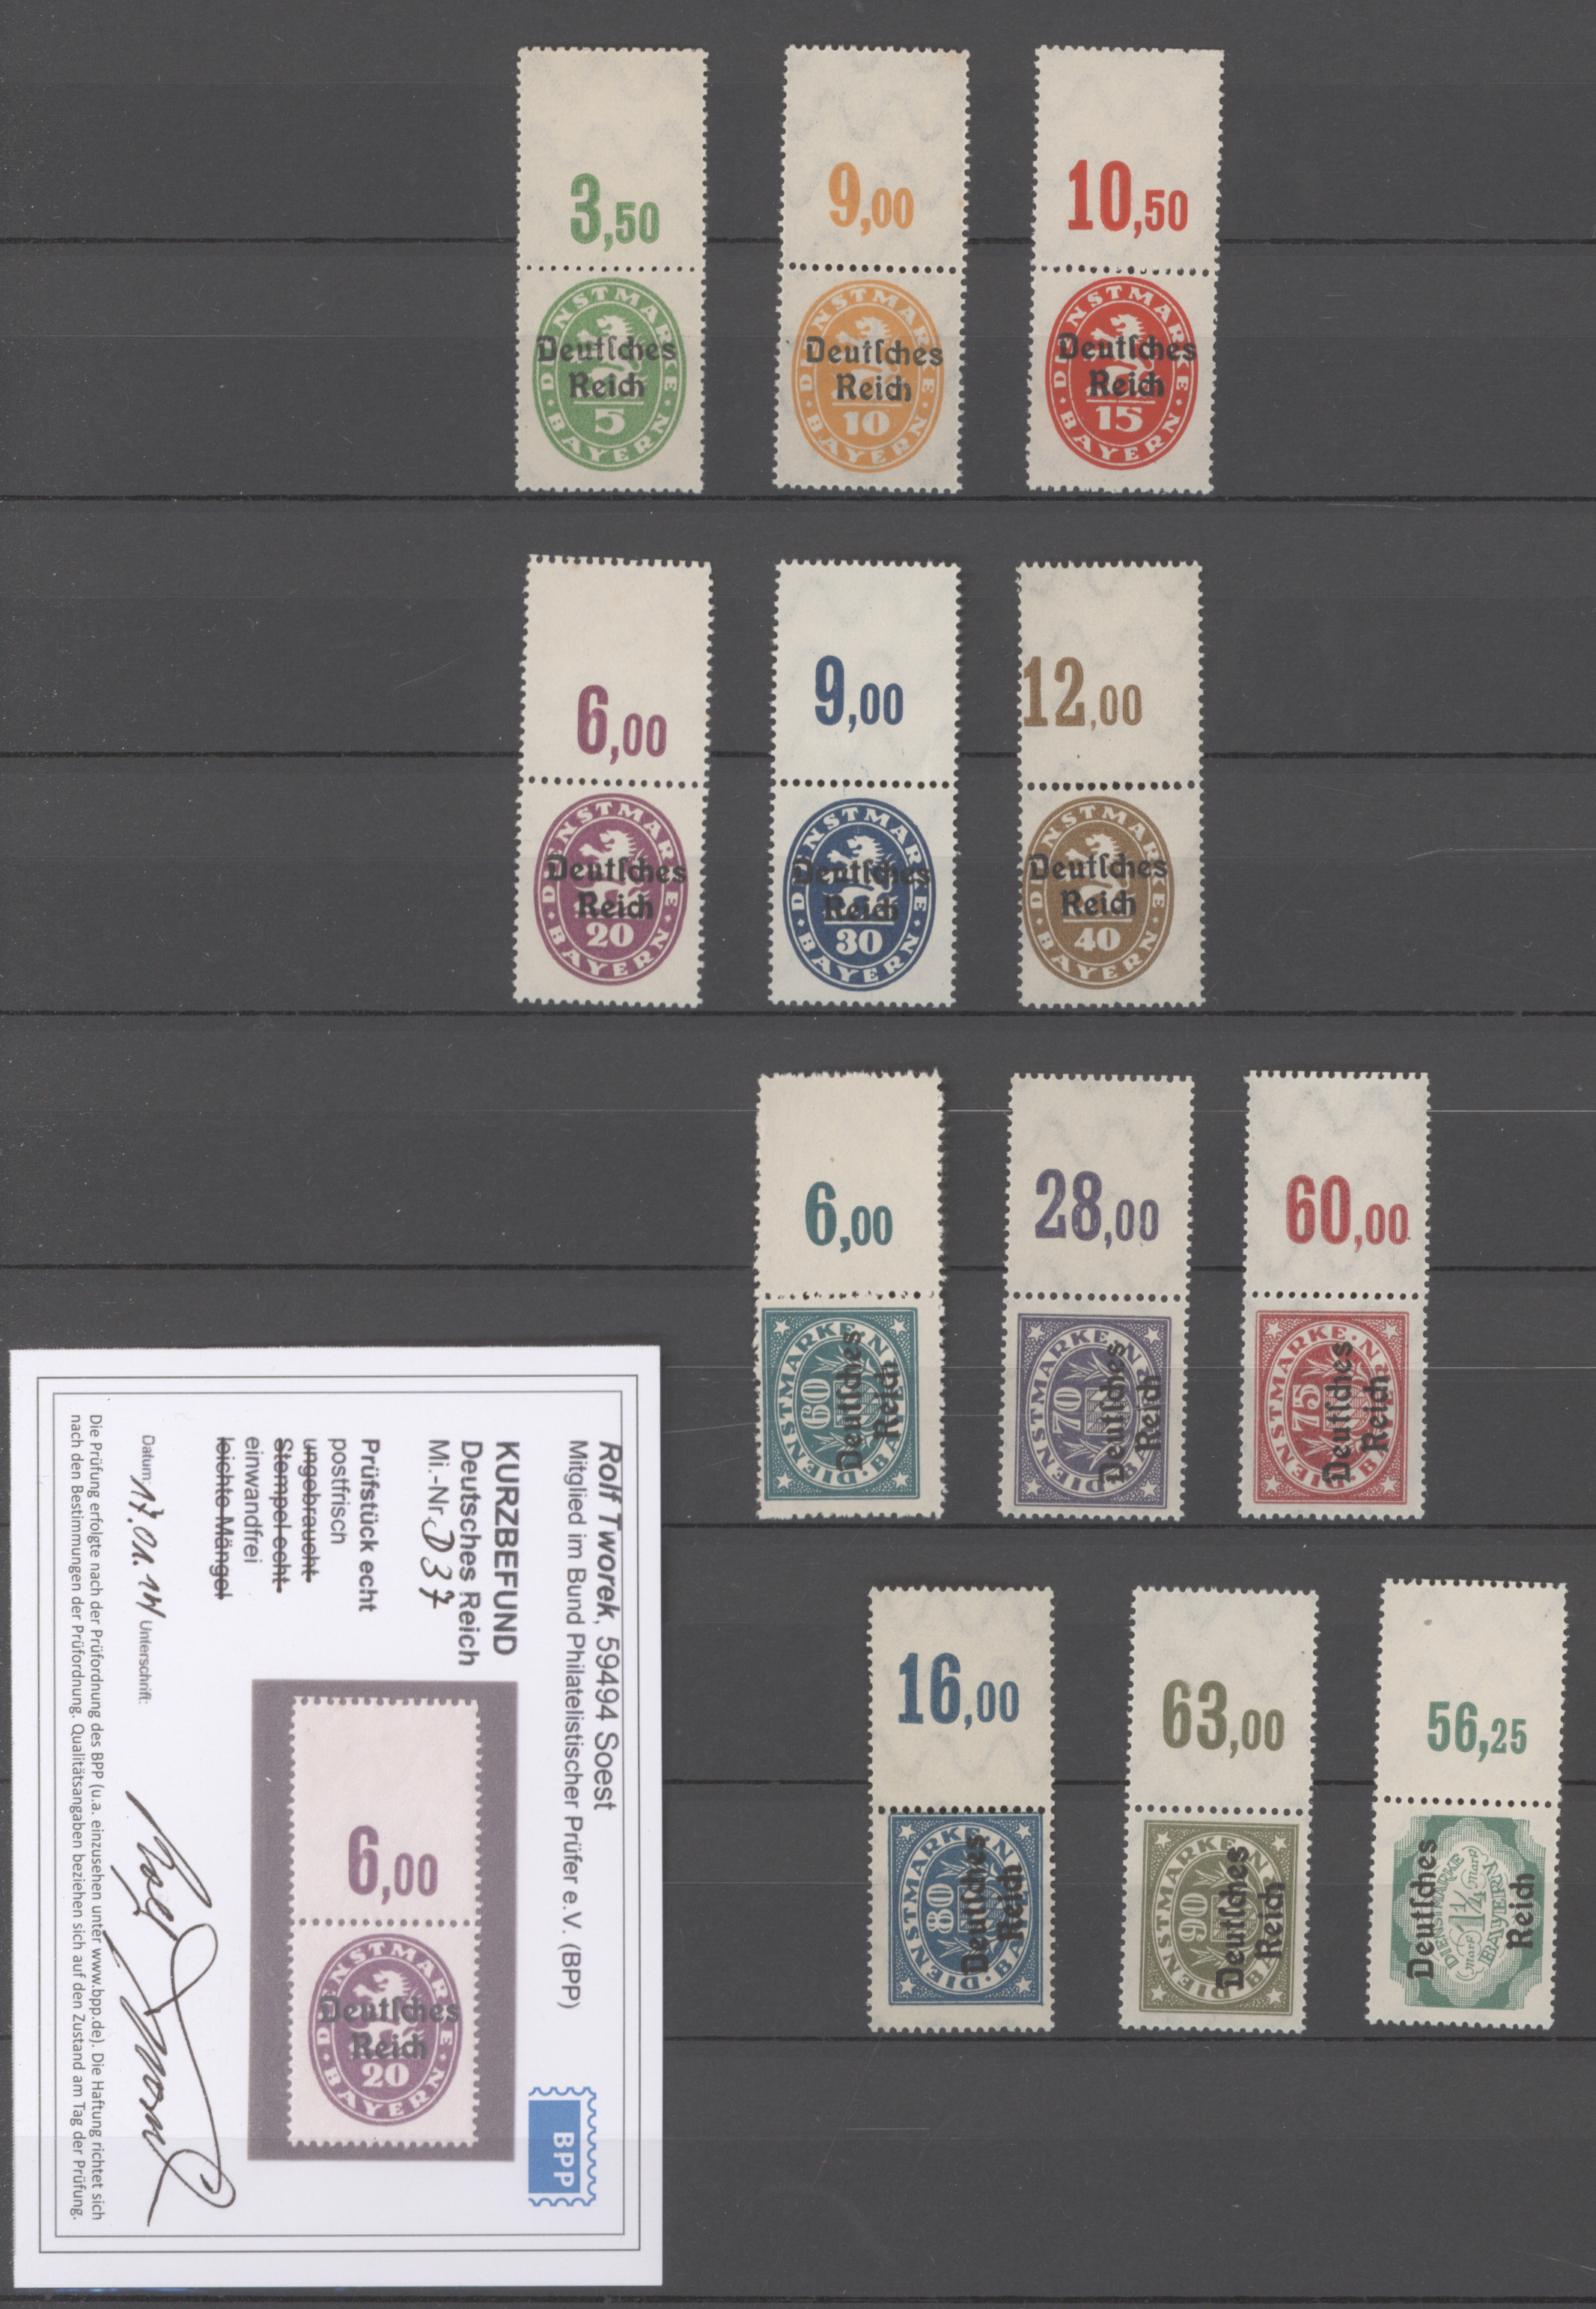 Lot 08763 - Deutsches Reich - Dienstmarken  -  Auktionshaus Christoph Gärtner GmbH & Co. KG 53rd AUCTION - Day 5, Collections Estates, Germany, Picture Postcards